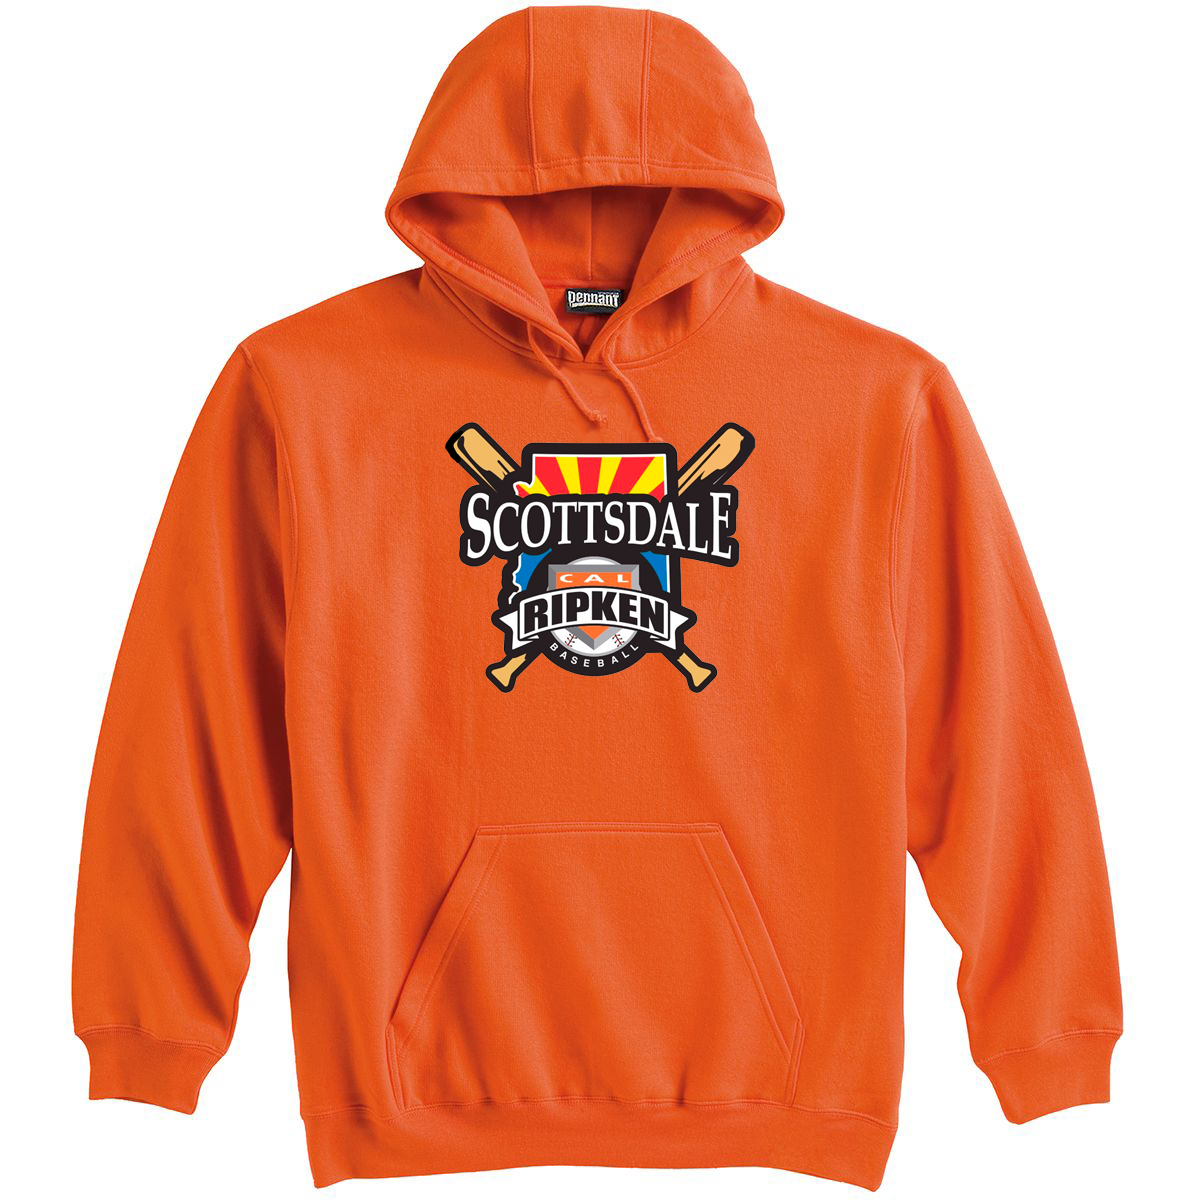 Scottsdale Cal Ripken Baseball Sweatshirt